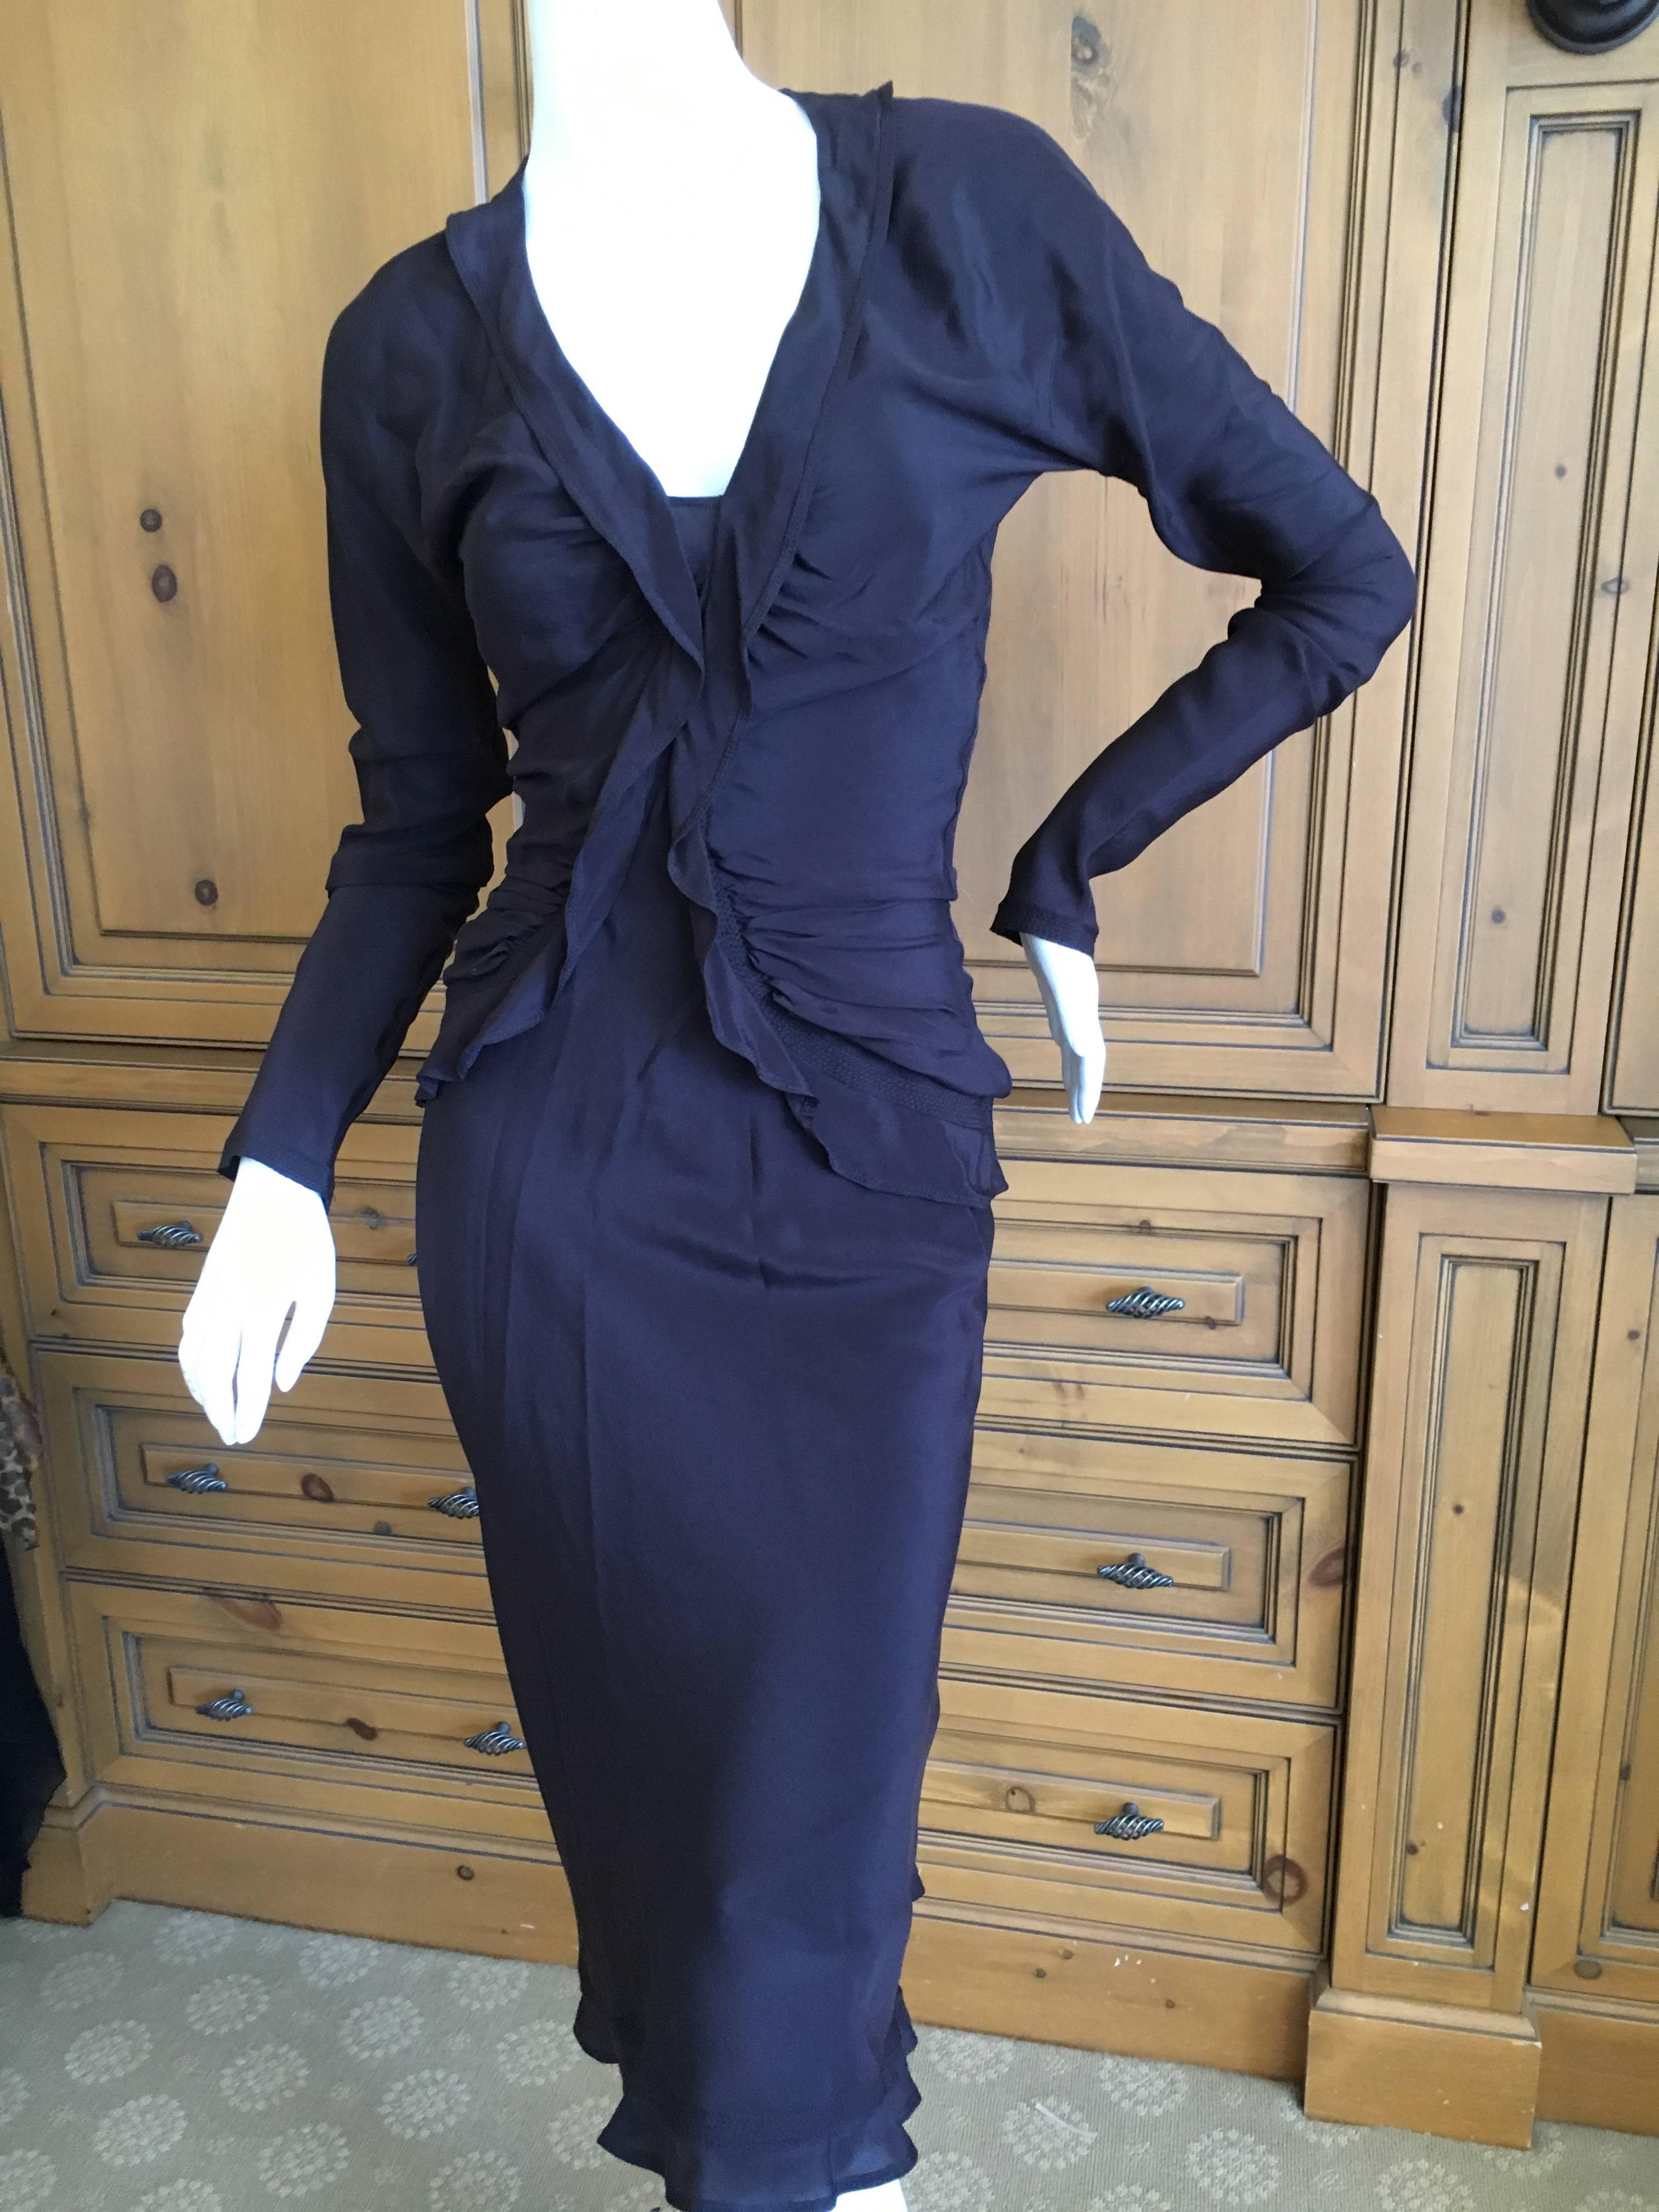 Yves Saint Laurent by Tom Ford Black Ruffle Silk Dress.
Size 38
Bust 36